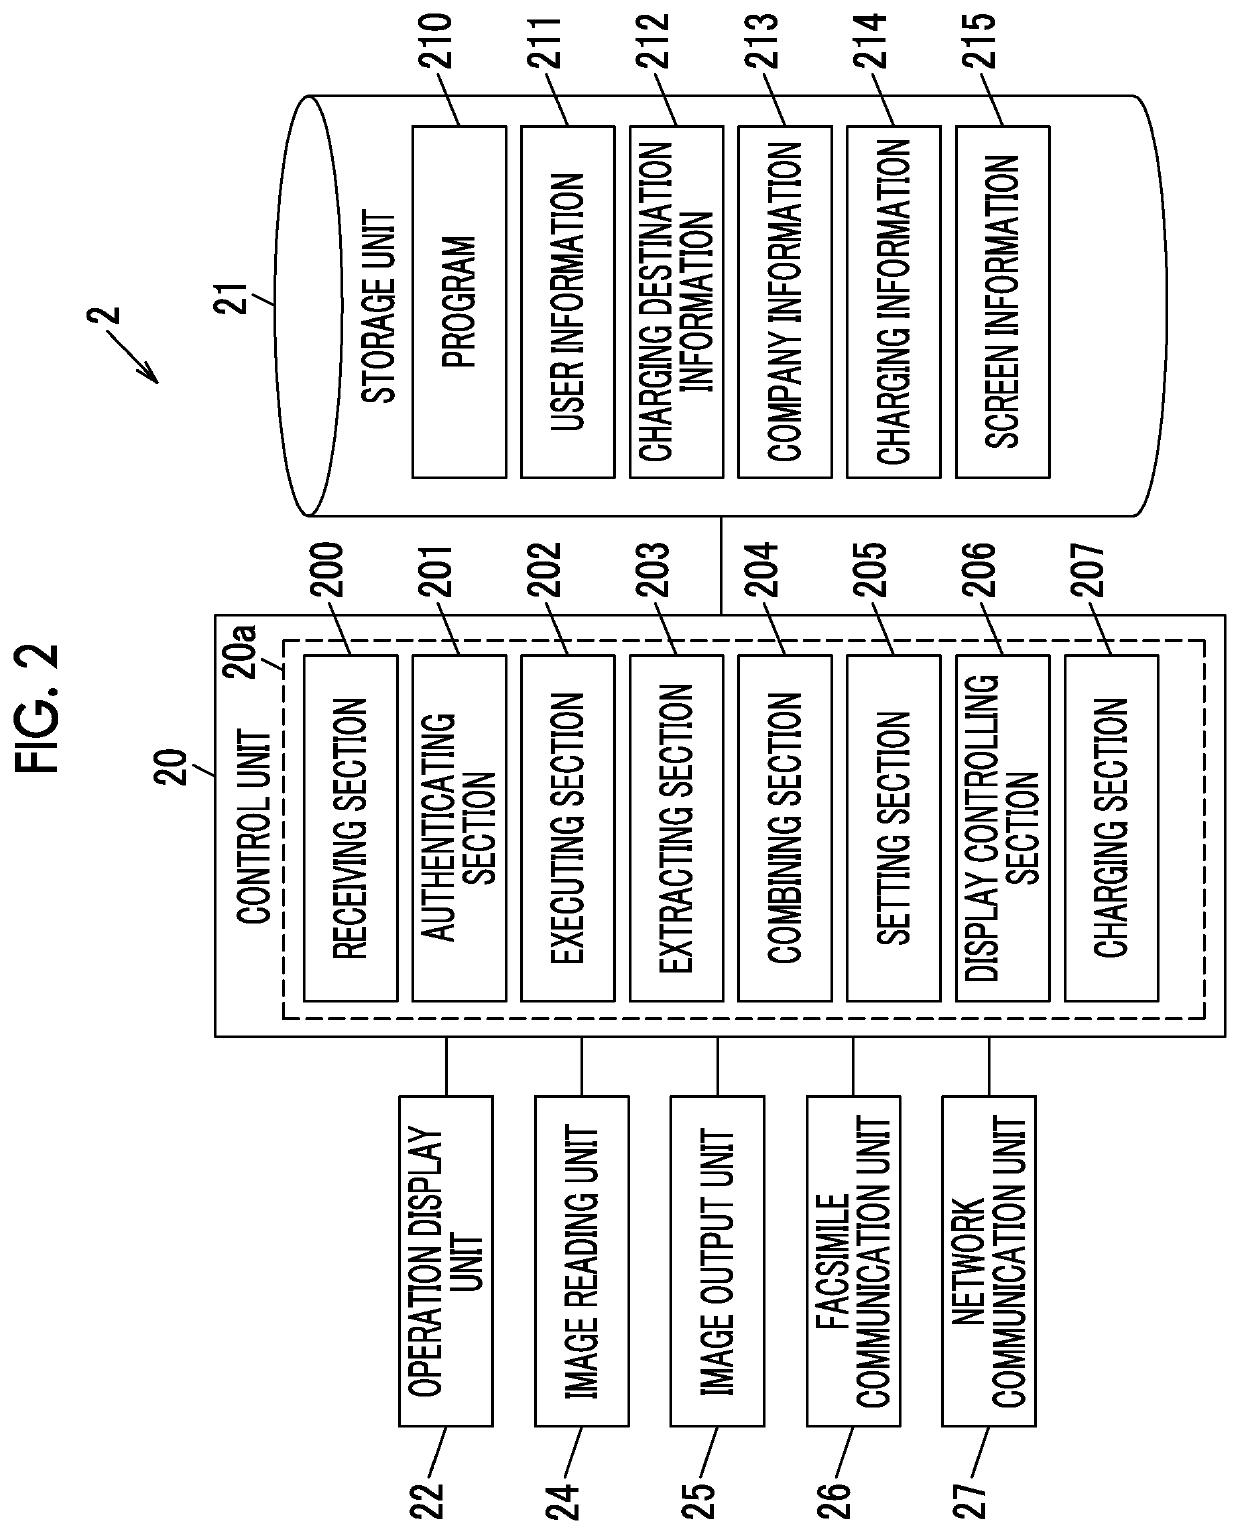 Image processing apparatus and non-transitory computer readable medium storing program